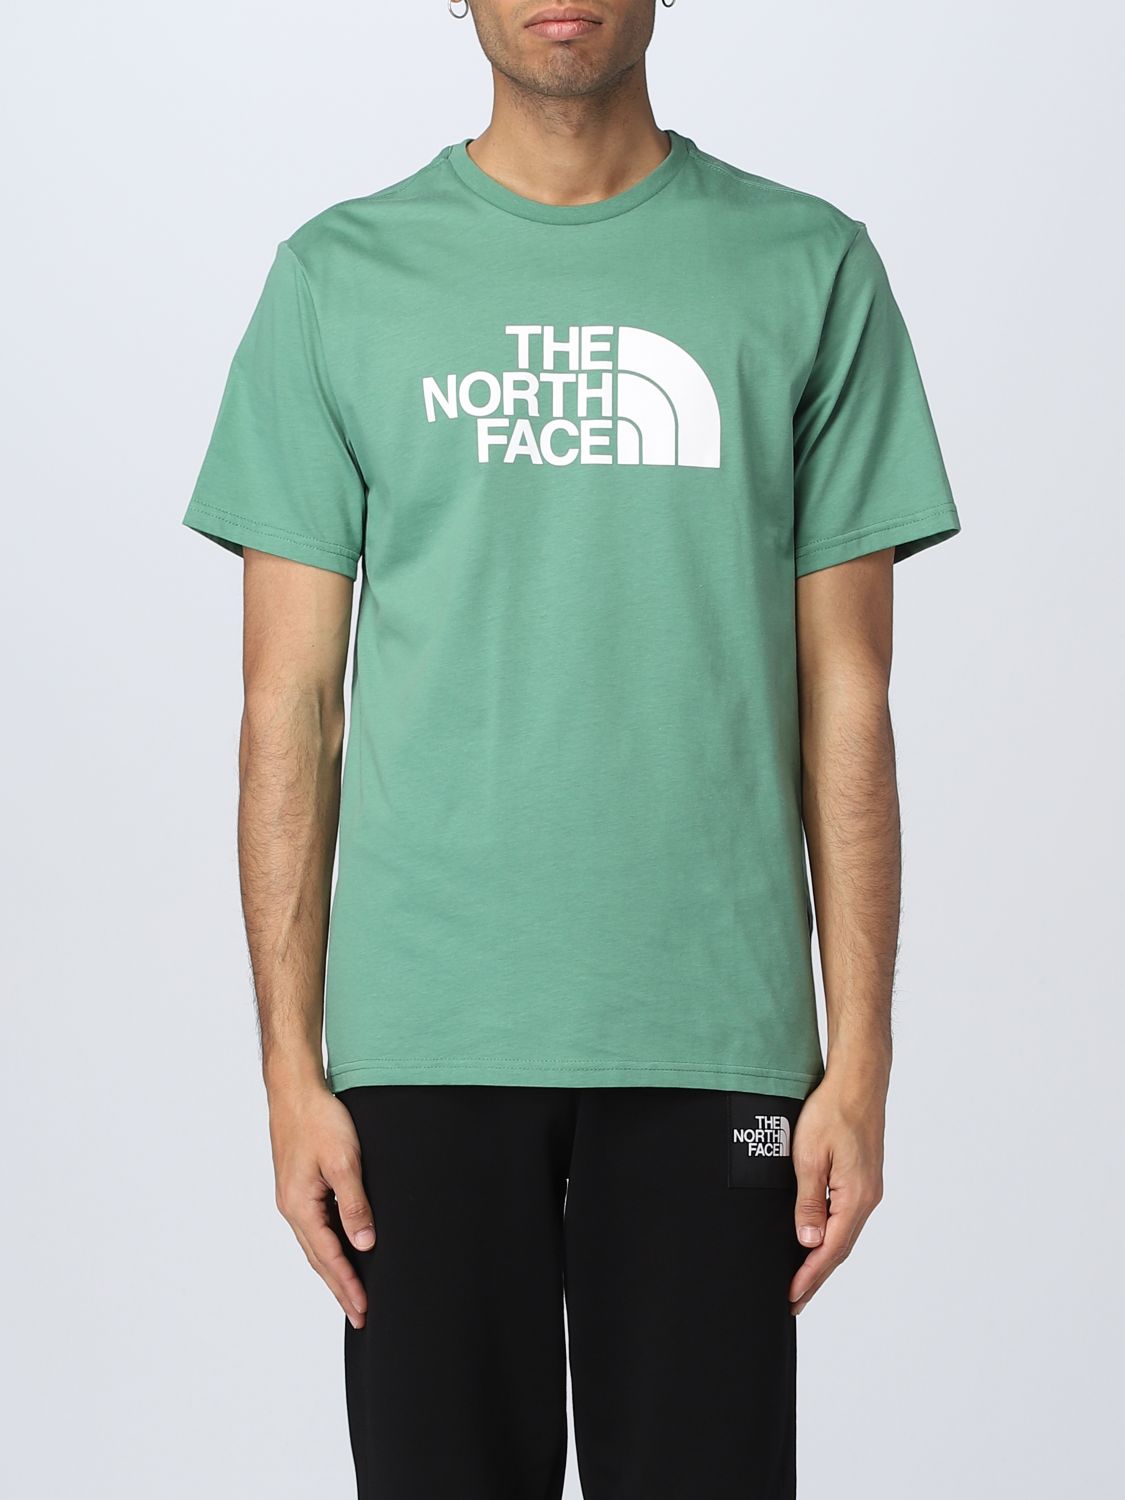 T-Shirt The North Face: The North Face Herren T-Shirt grün 1